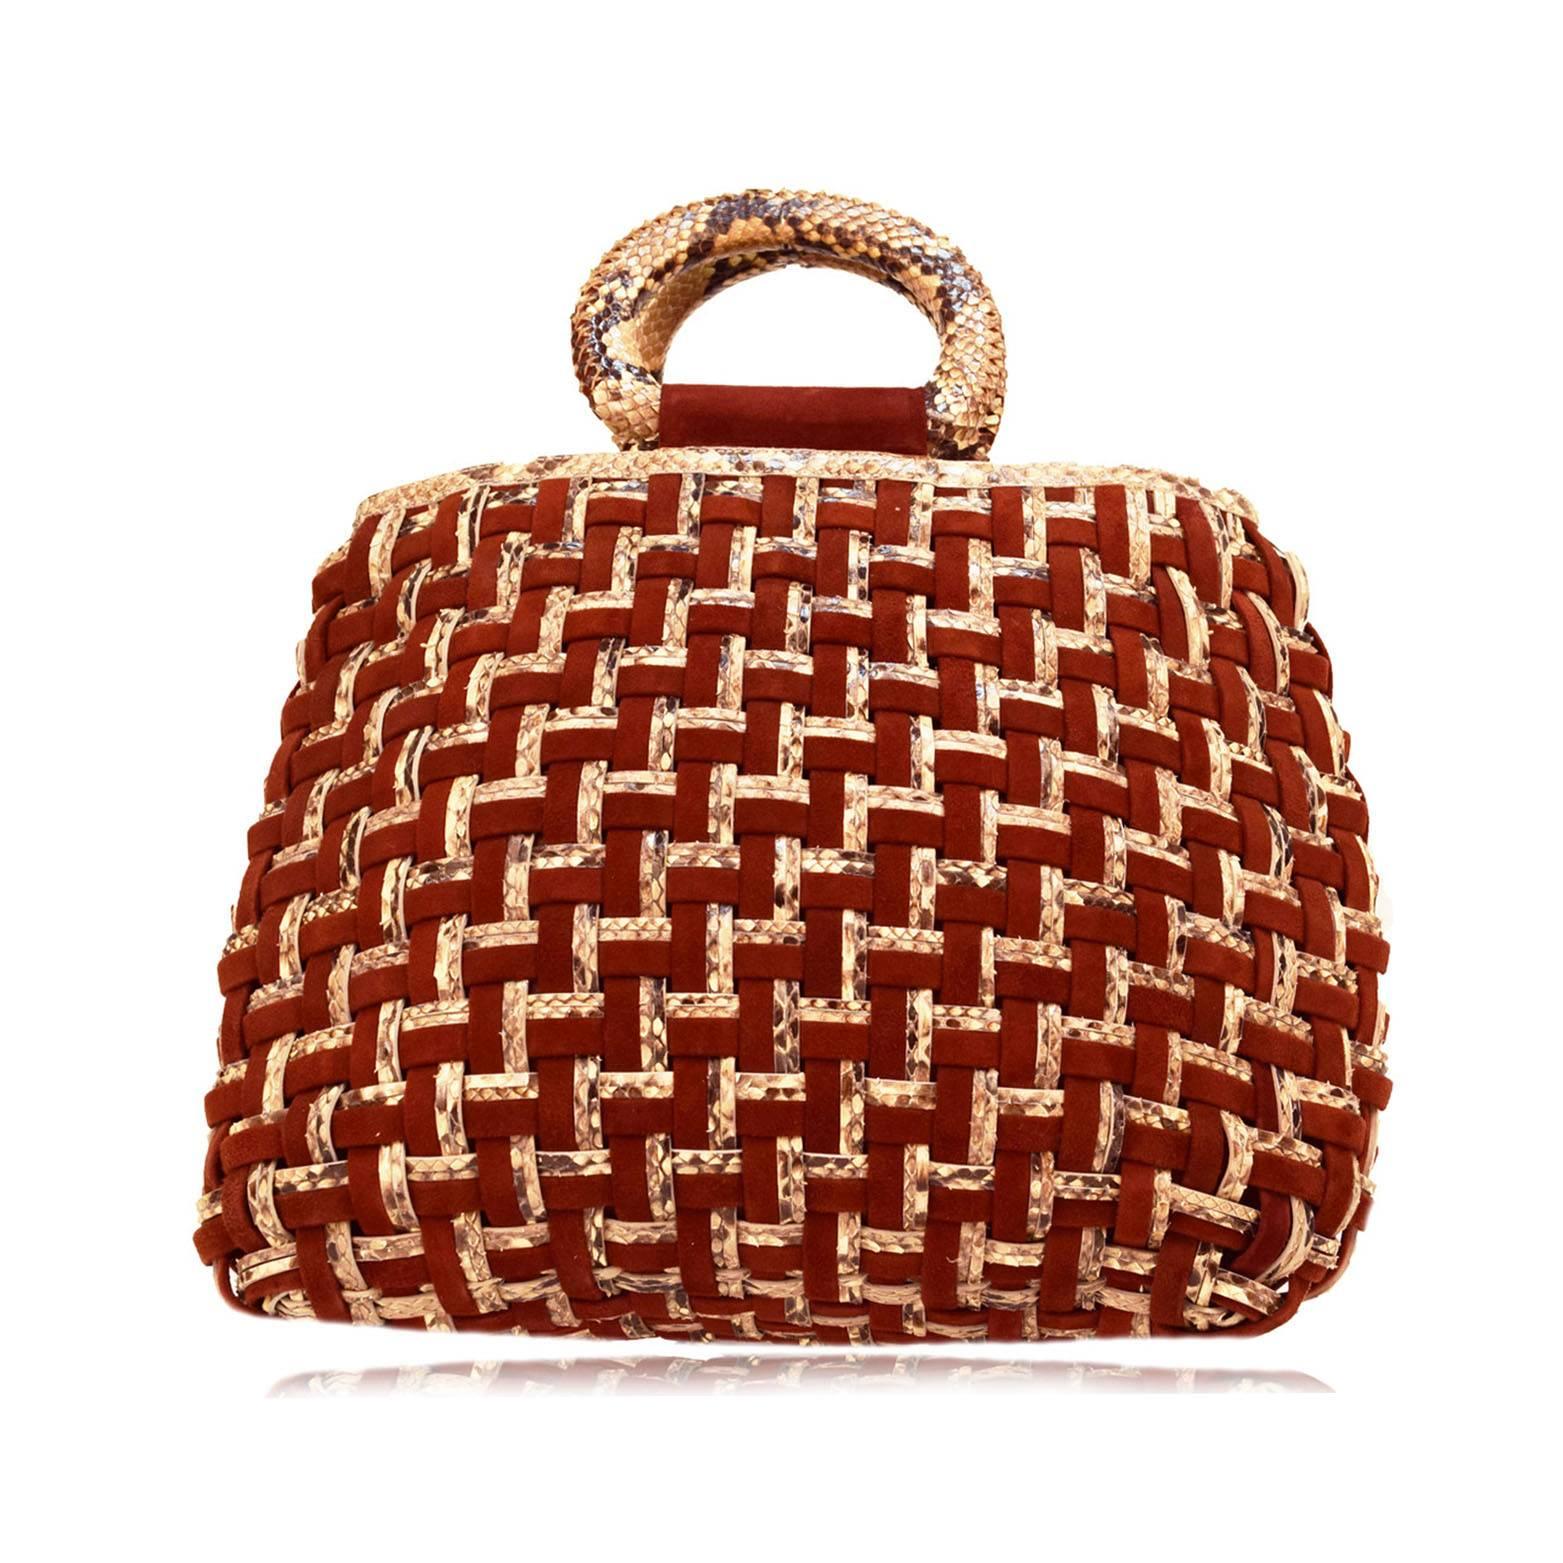 Brown Nancy Gonzalez Merlot Suede and Snakeskin Leather Woven Handbag  For Sale